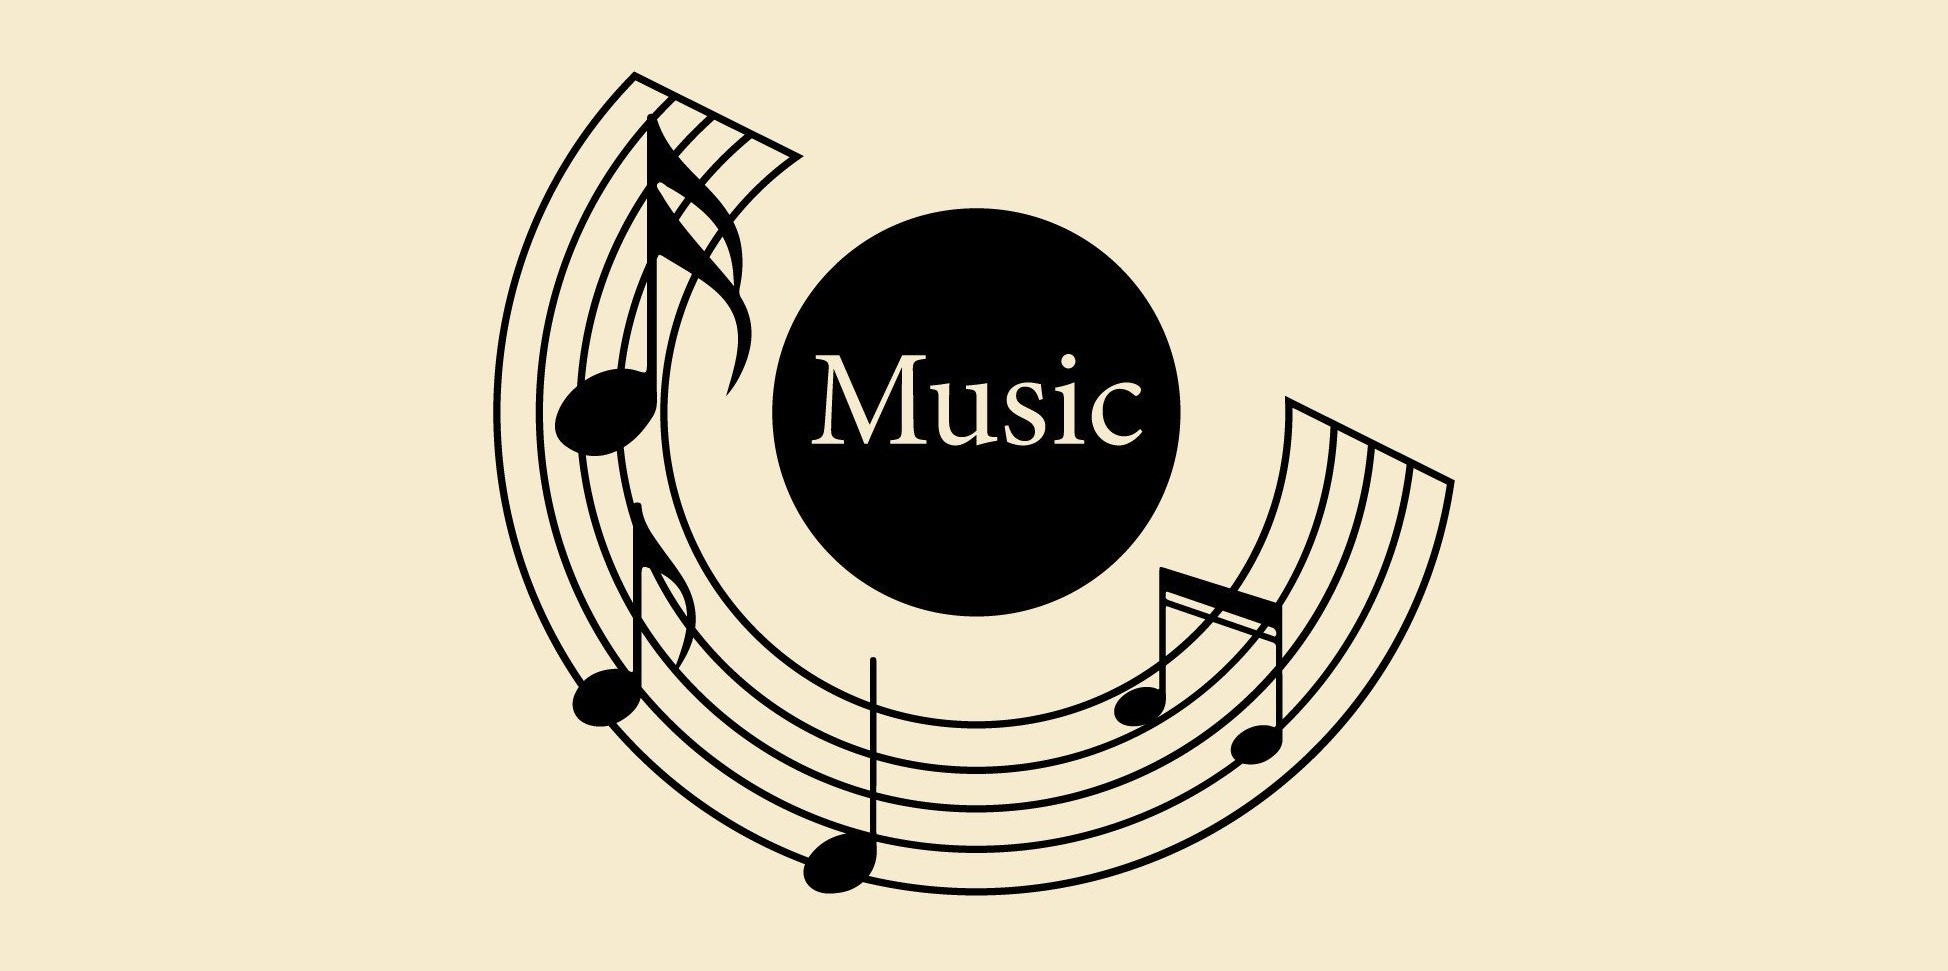 music-logo-vector-template-design-Graphics-38239116-1